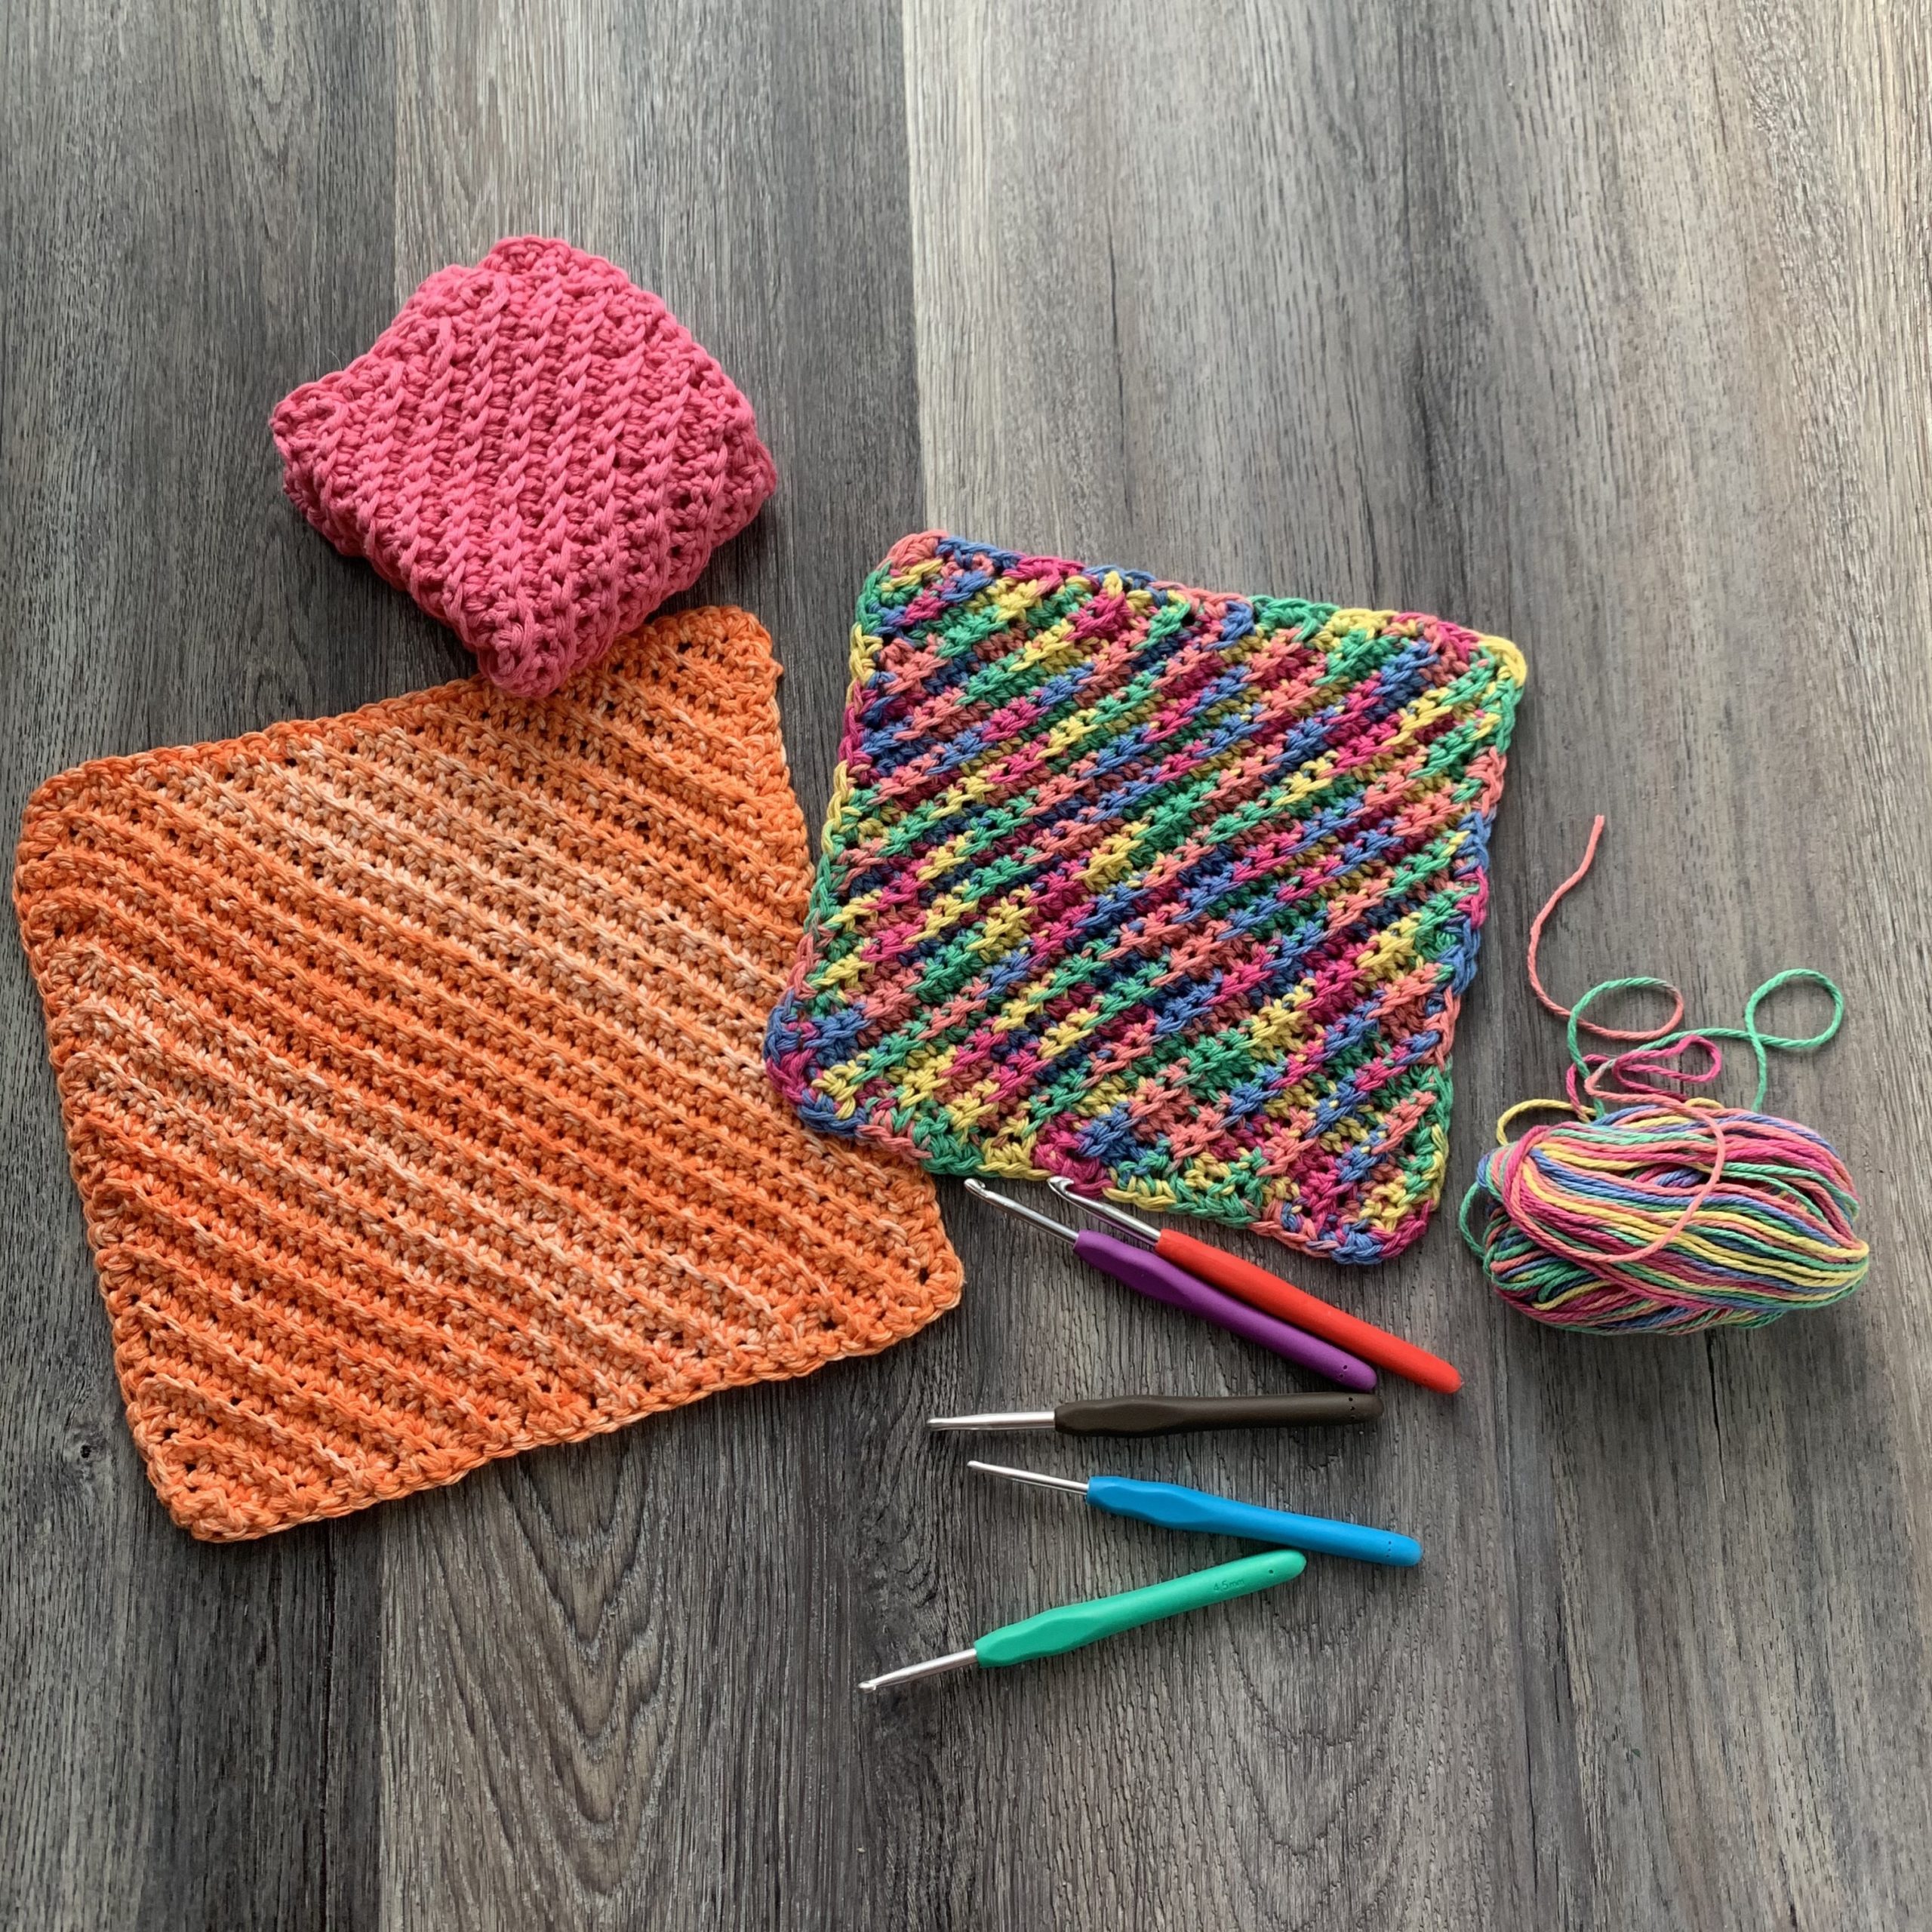 Cotton Dishcloth/Washcloth Supply Kit for Crocheters - Crafty Gemini